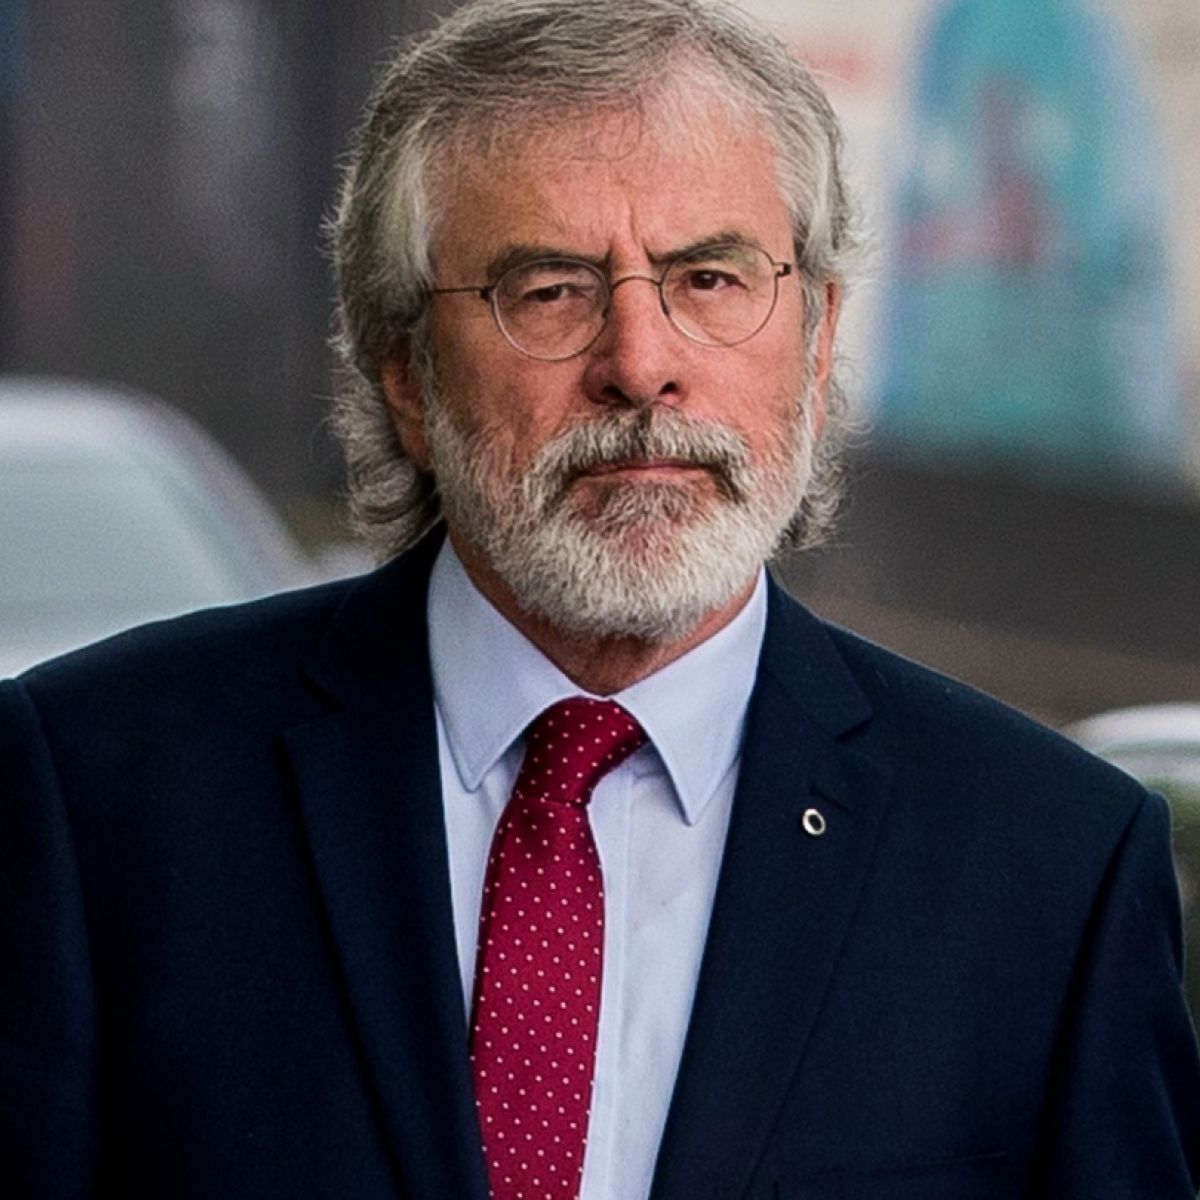 Gerry Adams' IRA denial 'a lie', veteran republican says in TV series